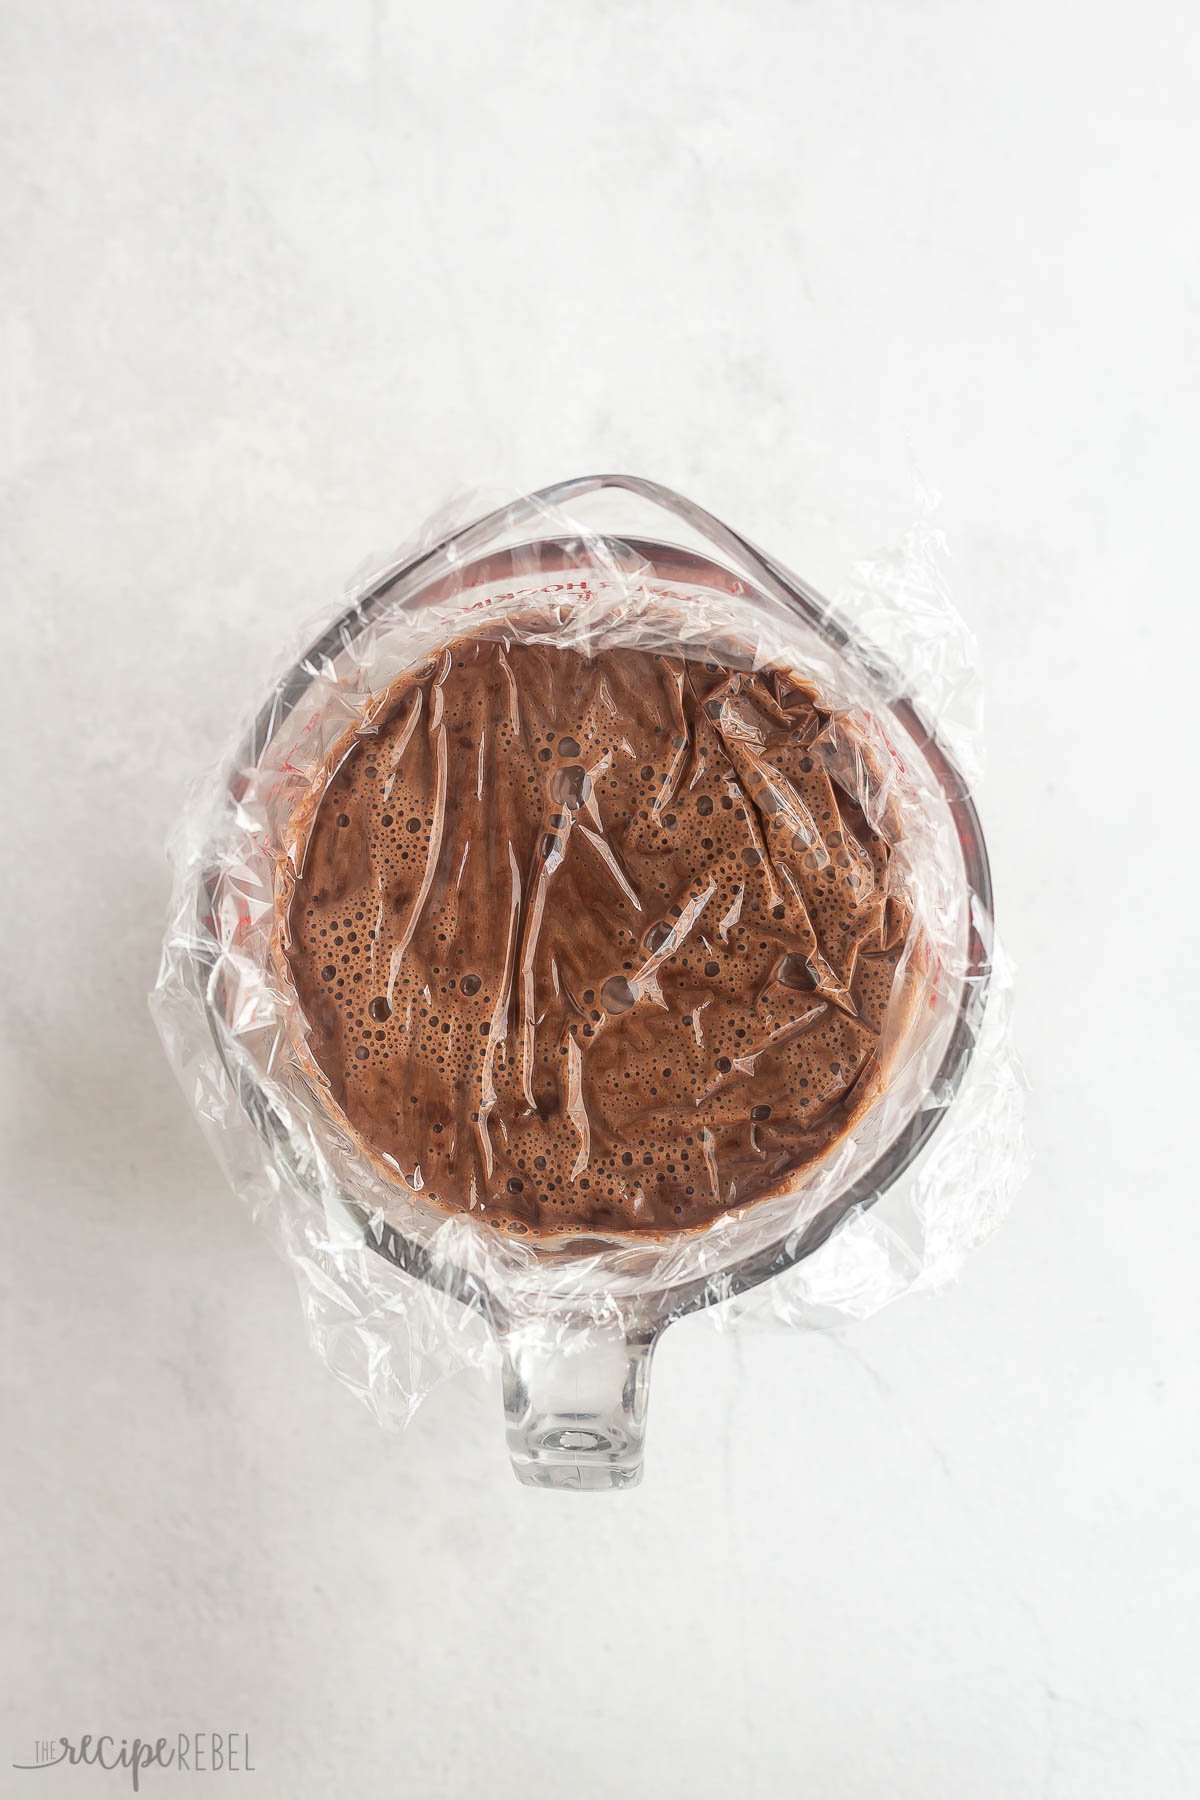 chocolate custard ice cream base being chilled.